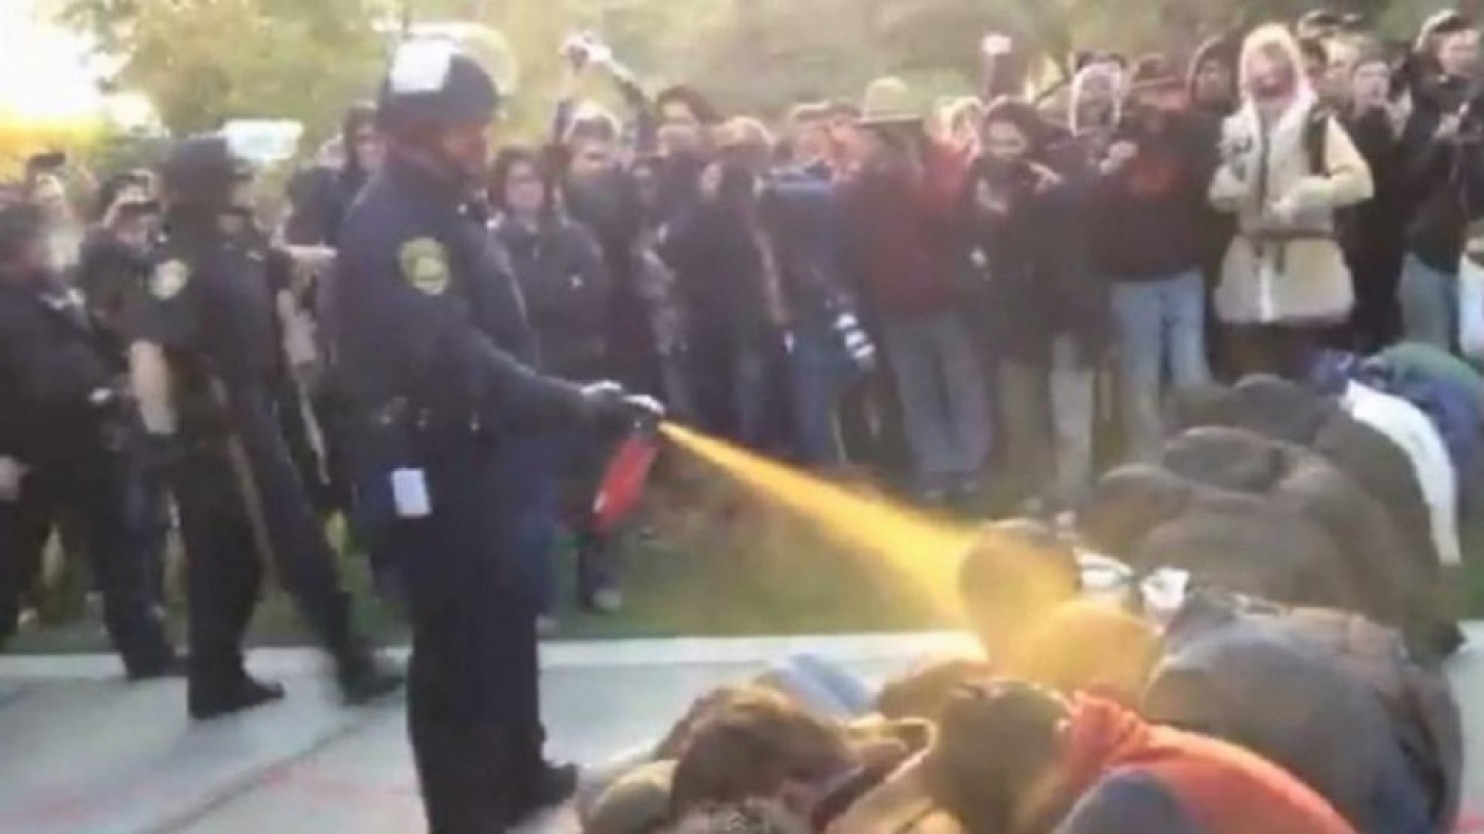 pepper-spray cop, UC Davis pepper-spray incident, Occupy student protests, Linda Katehi, Janet Napolitano